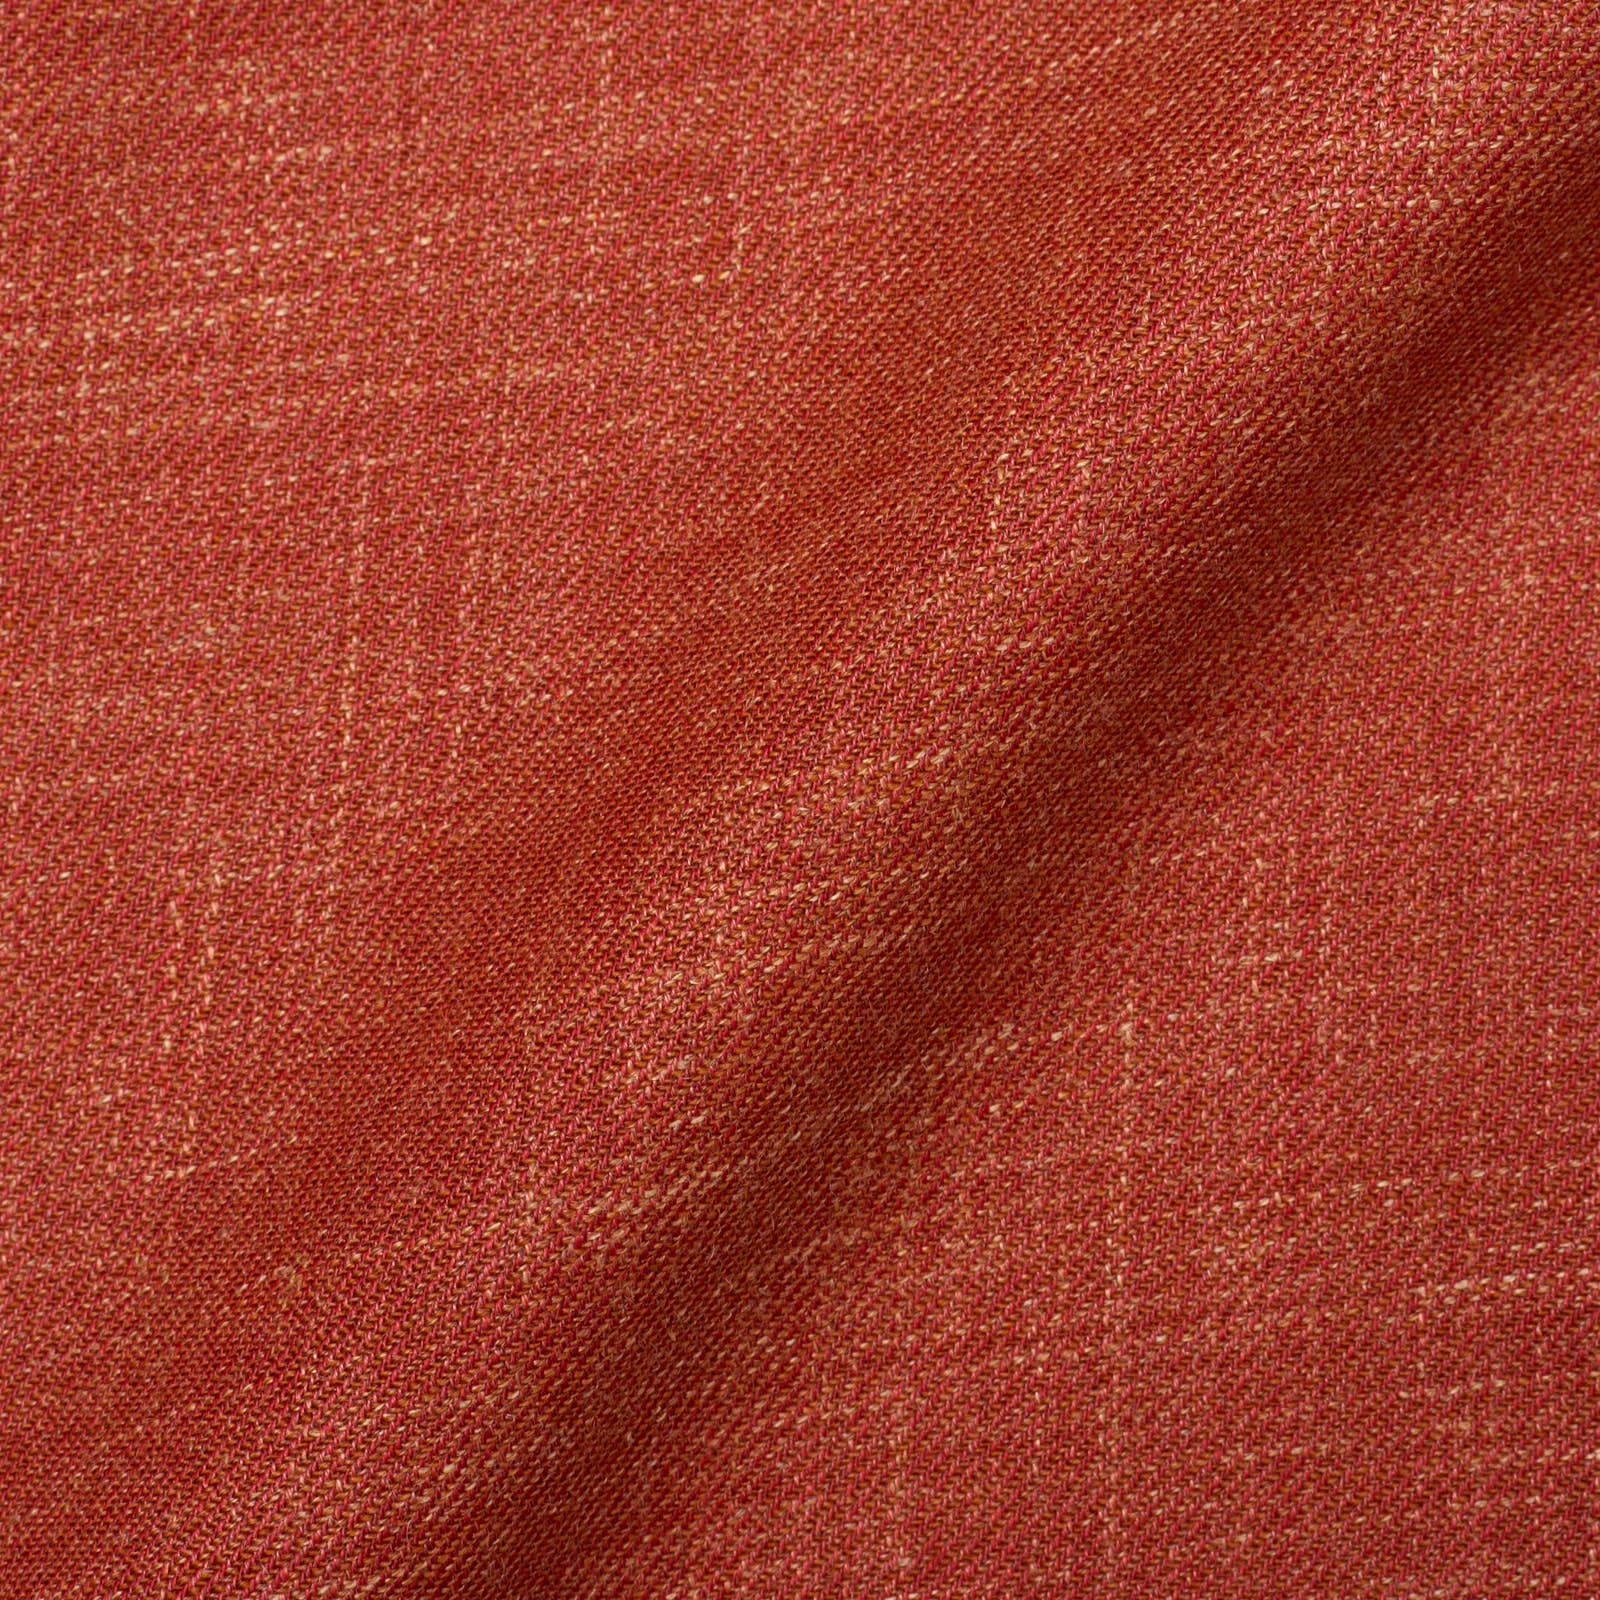 VANNUCCI Milano Brick Red Virgin Wool-Linen Half Lined Jacket EU 54 NEW US 42 44